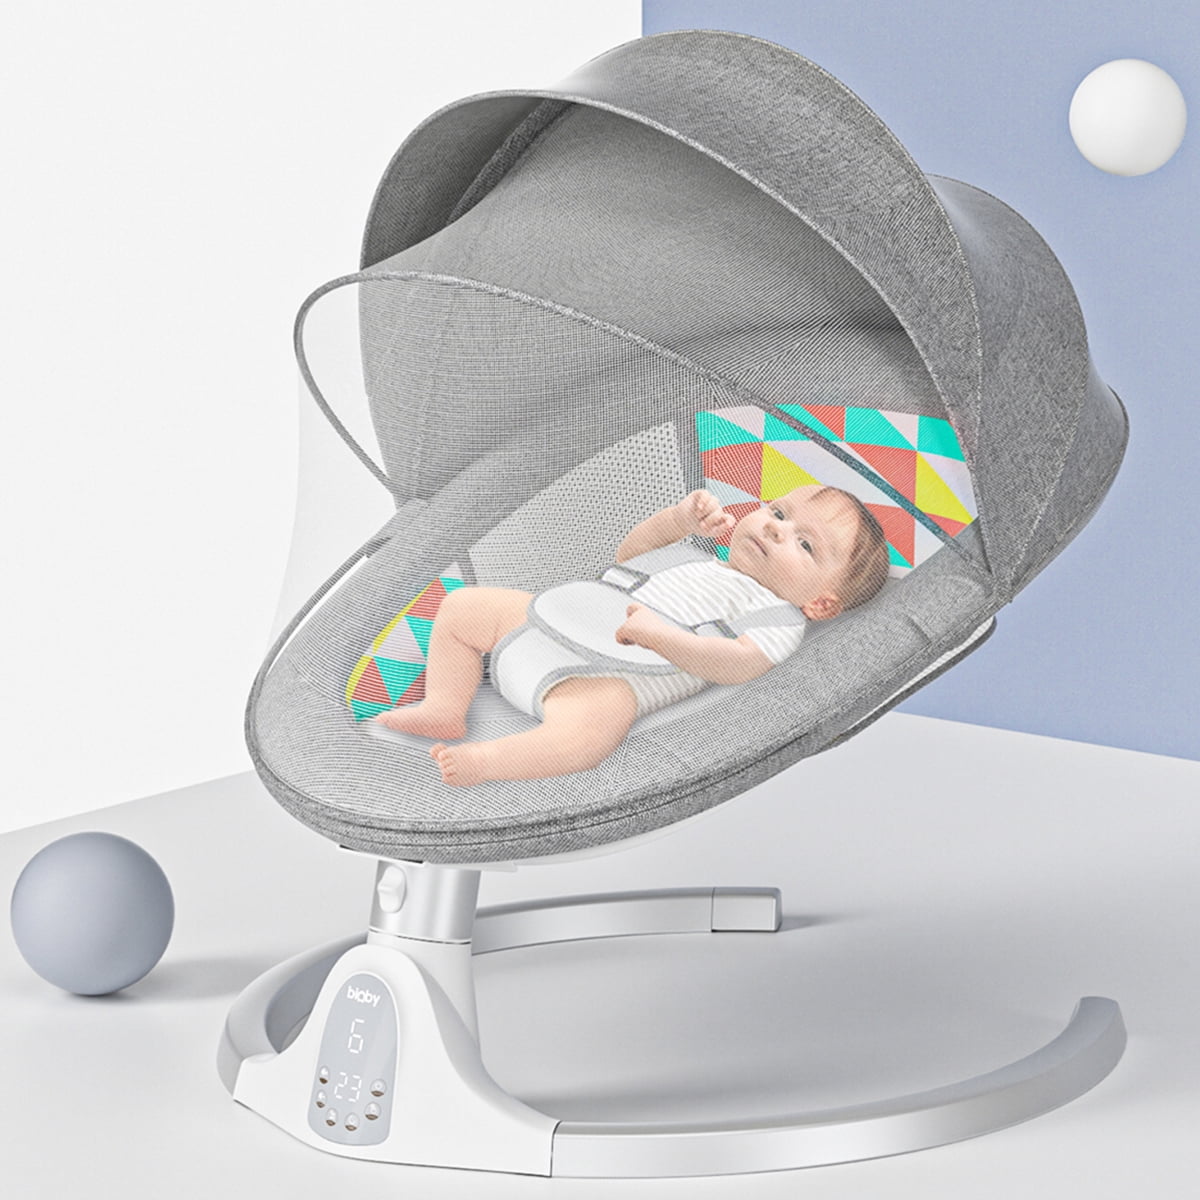 ELECTRONIC CRIB ROCKER SLEEPER FOR CRYING BABY No Box 